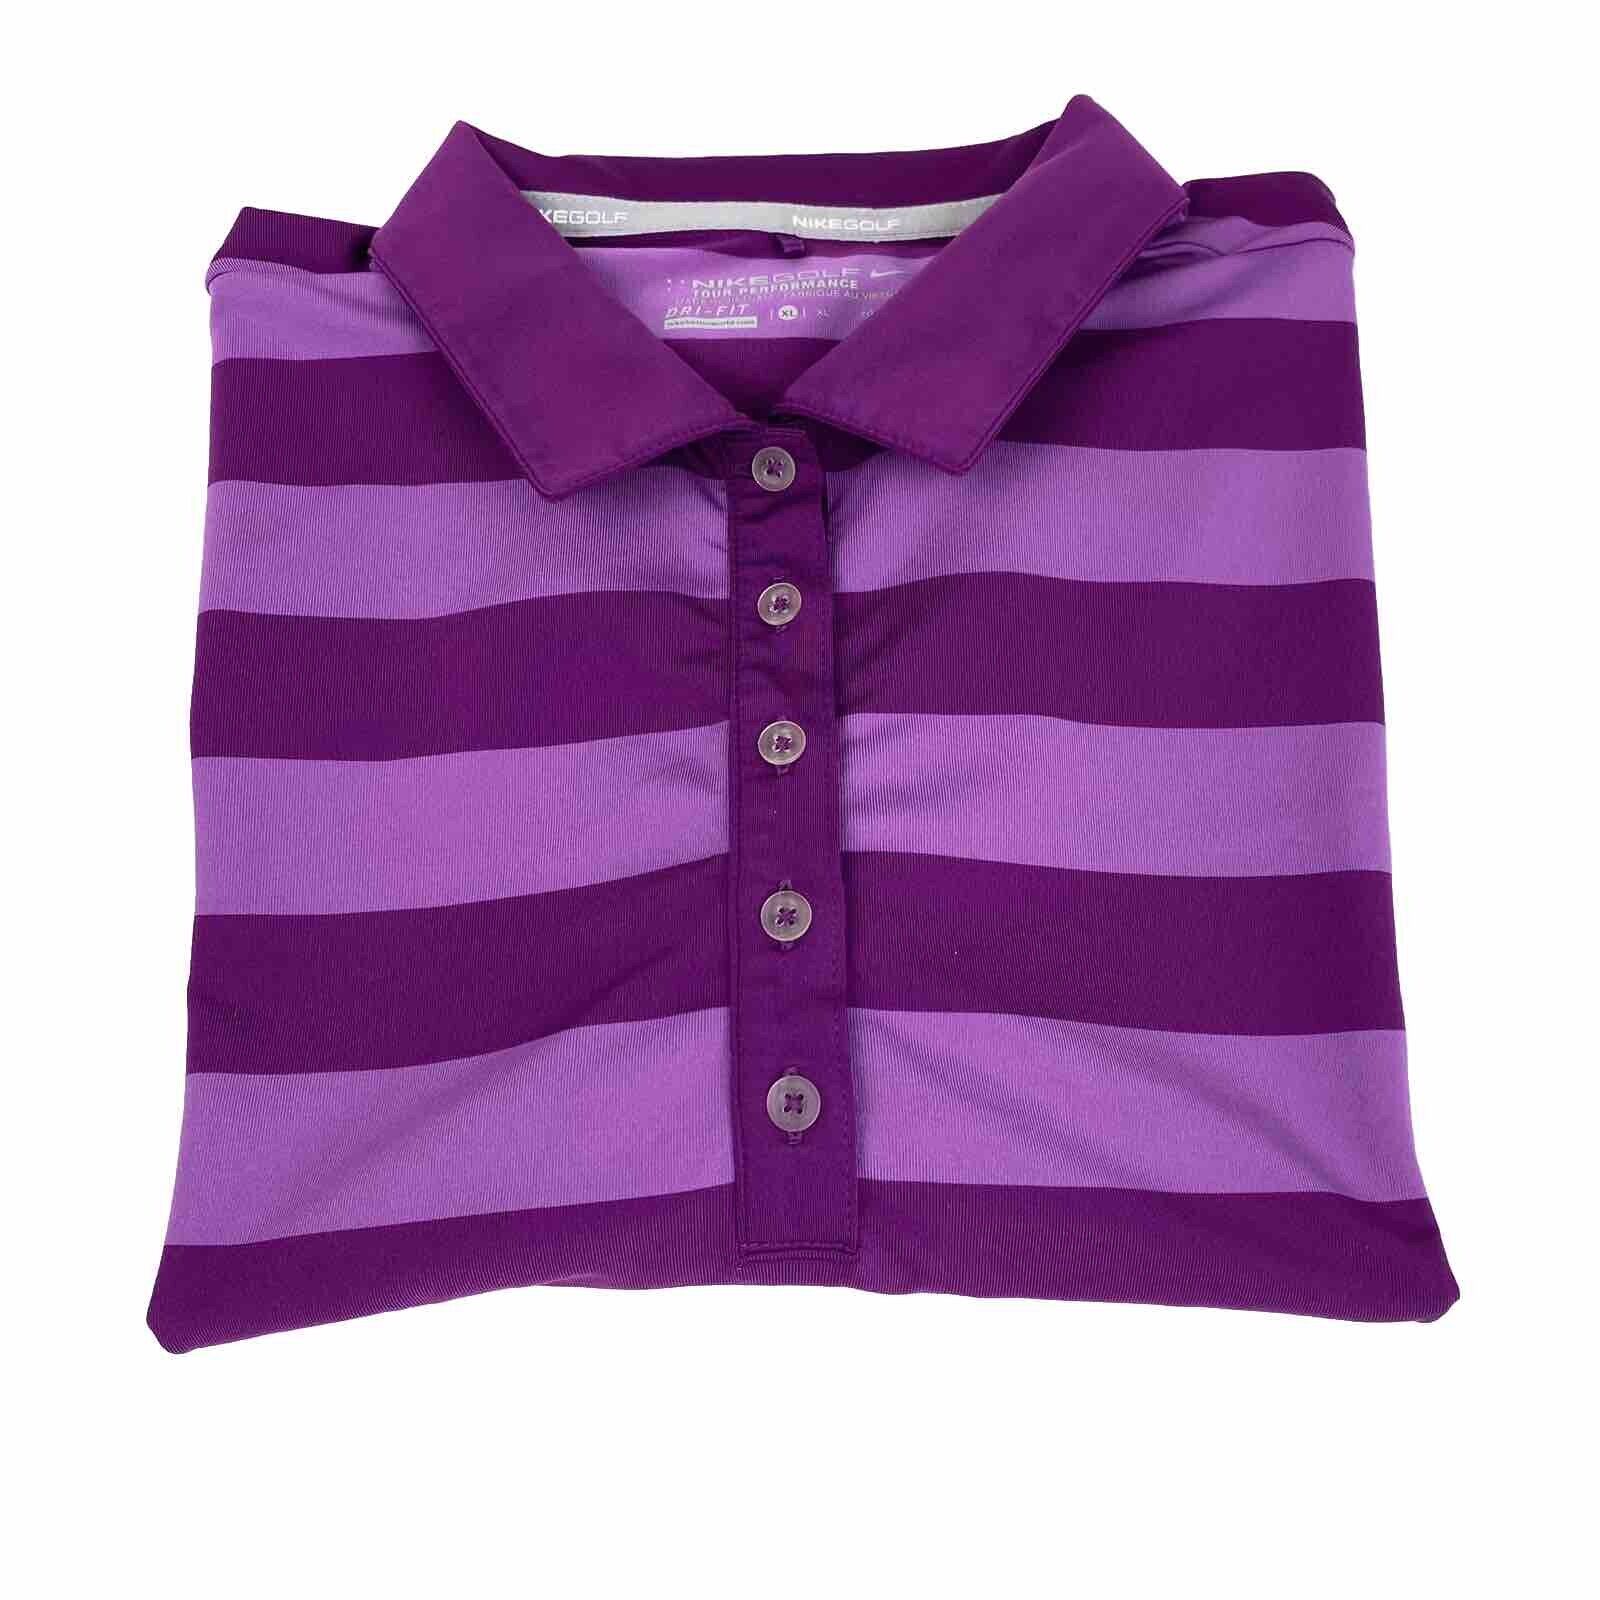 Nike Golf Dri-Fit Adult Womans XL Extra Large Purple Striped Golfing Polo Shirt